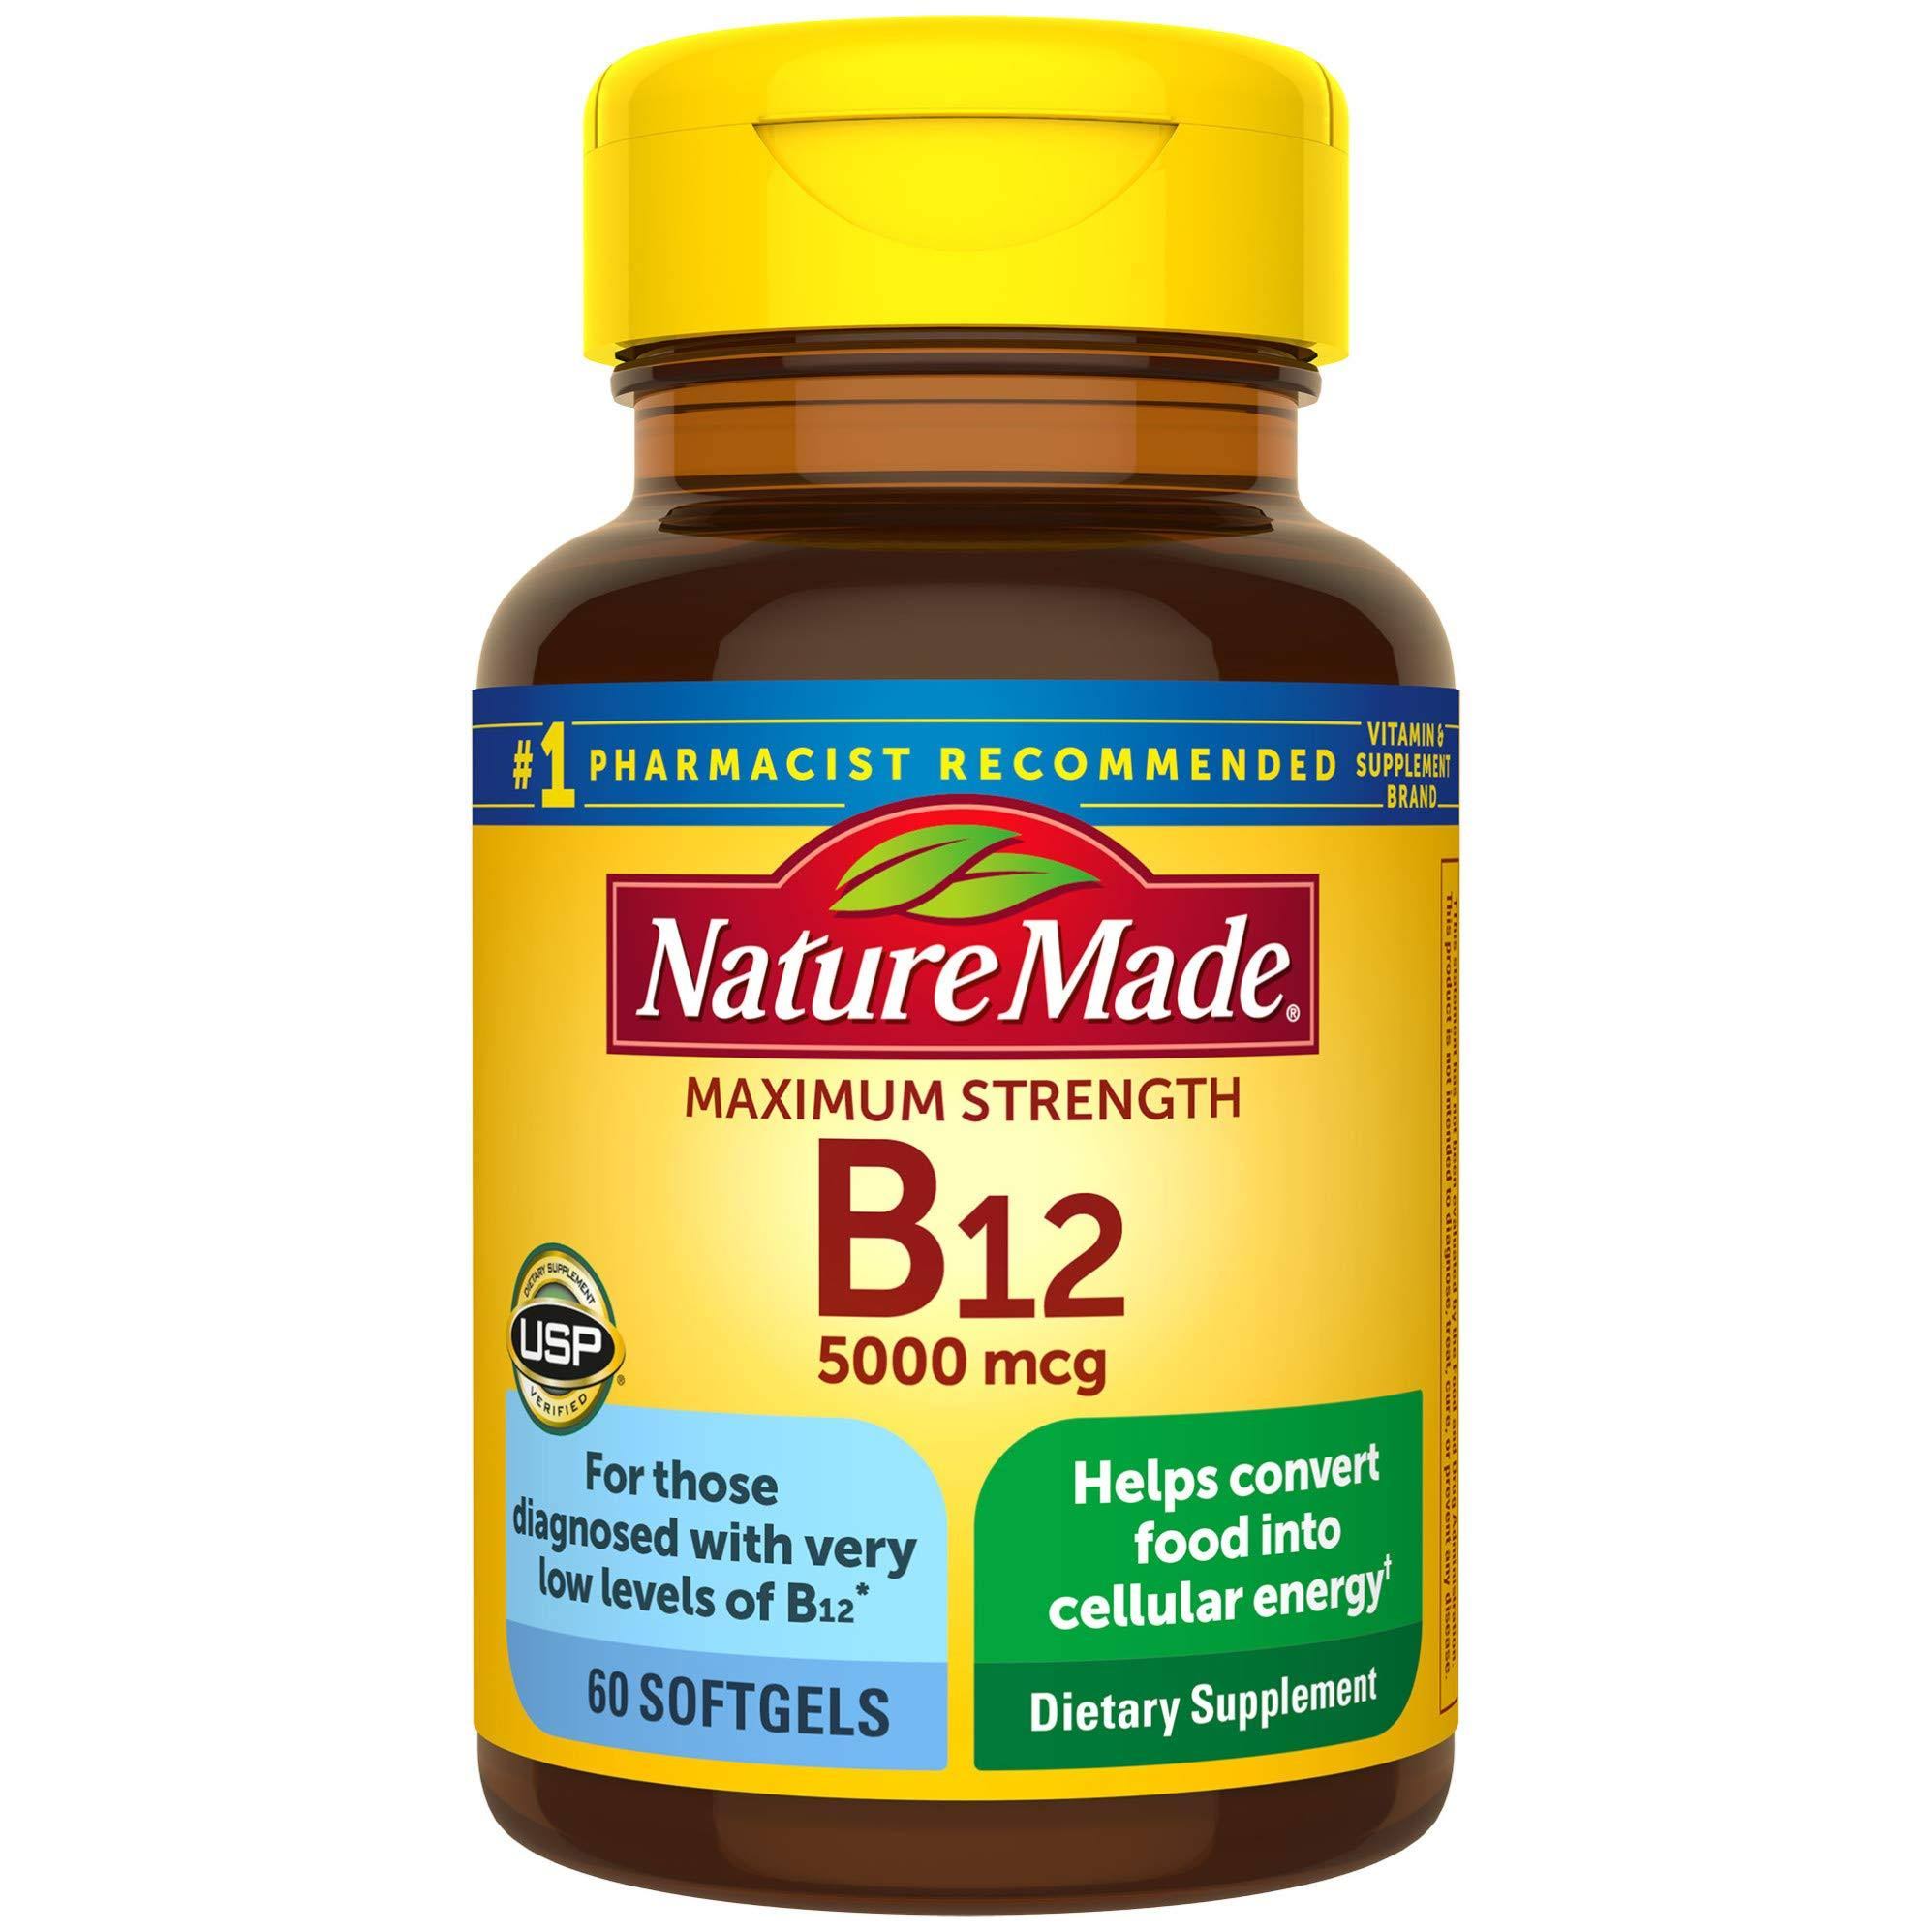 Nature Made Maximum Strength Vitamin B-12 Supplement - 60 Softgel